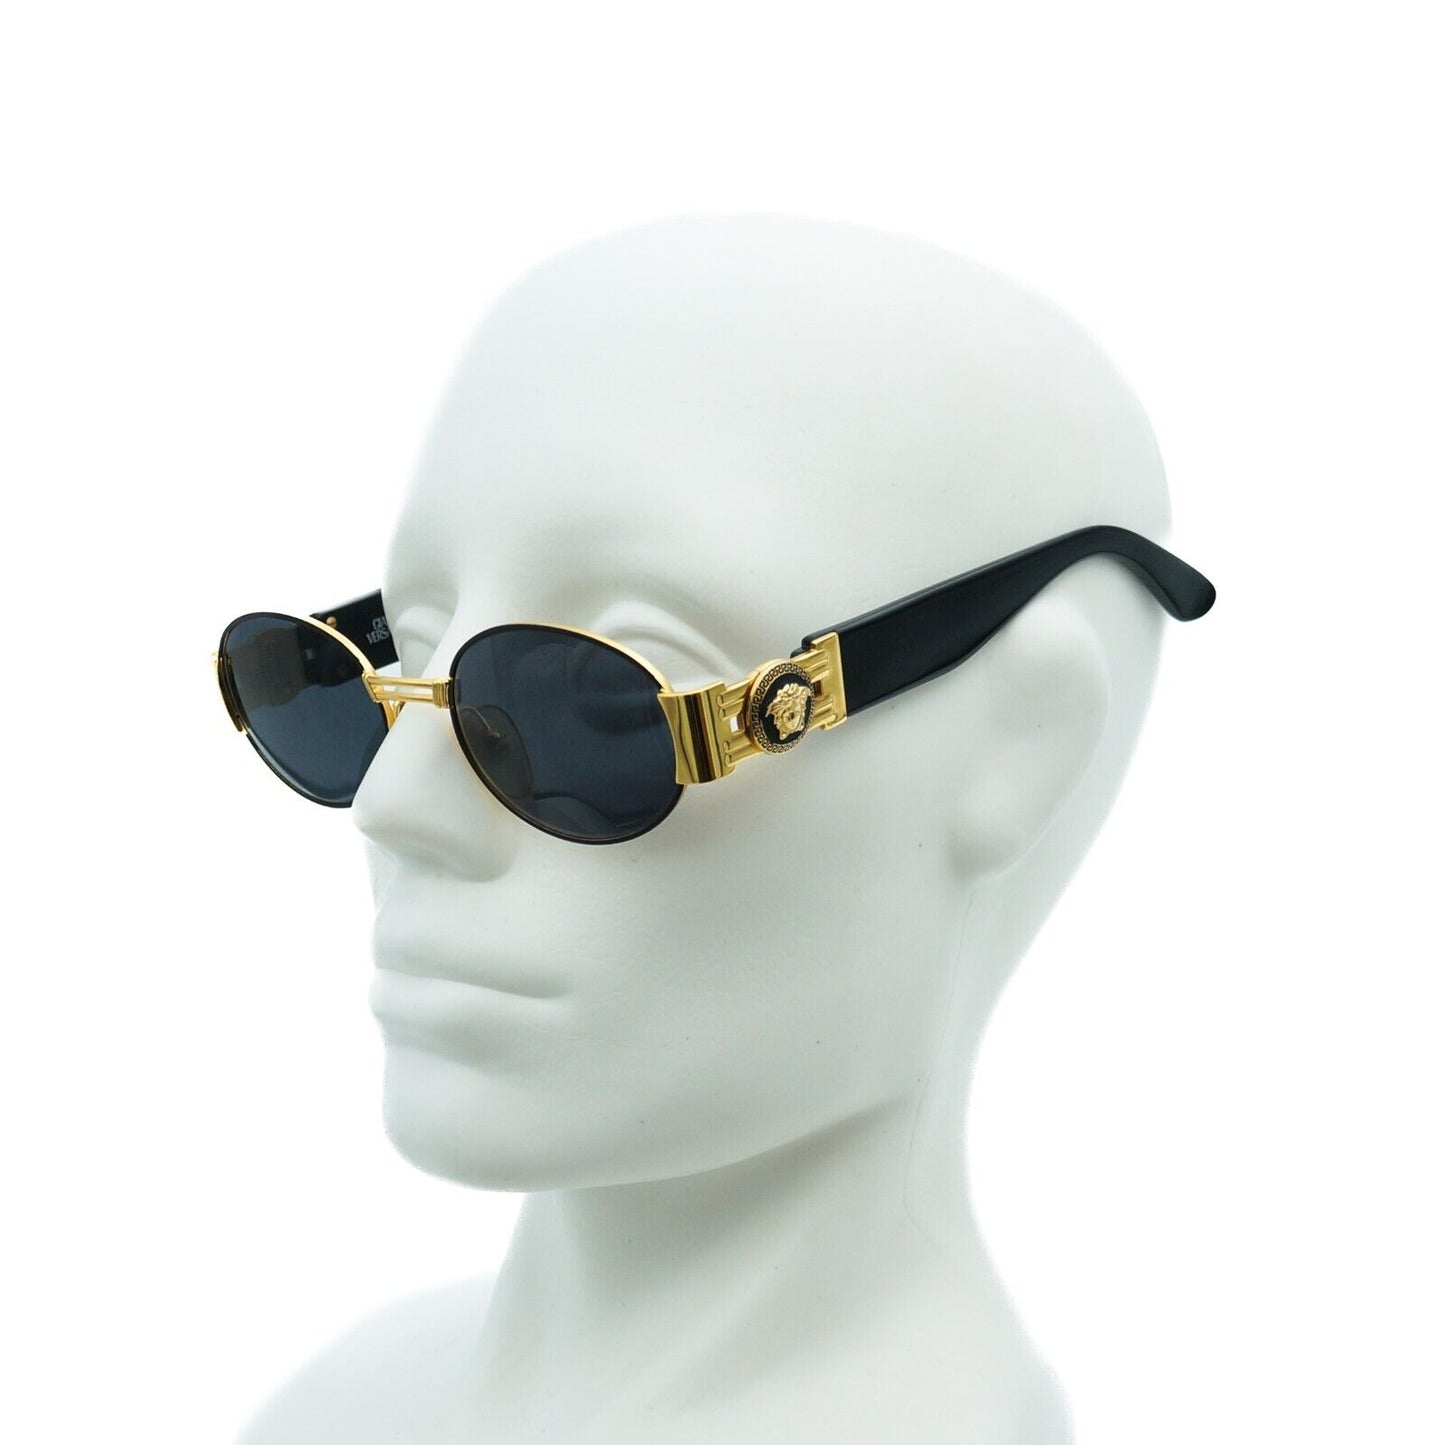 GIANNI VERSACE S71 Medusa Gold Oval Sunglasses Vintage 90s